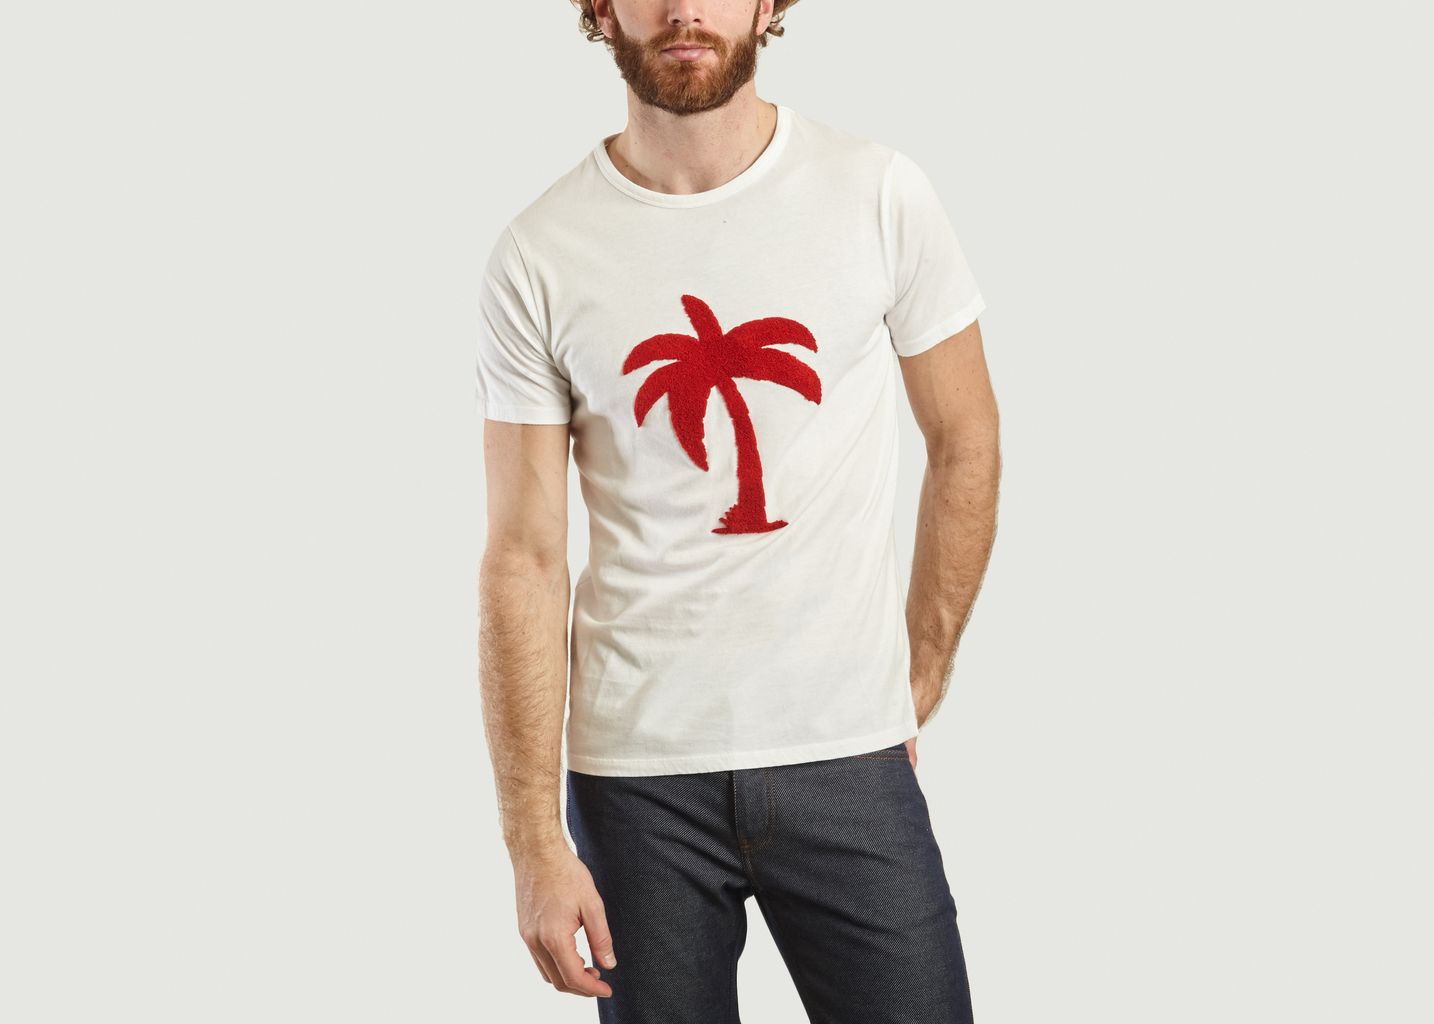 Yann Palm Spring embroidered t-shirt - Les Garçons Faciles